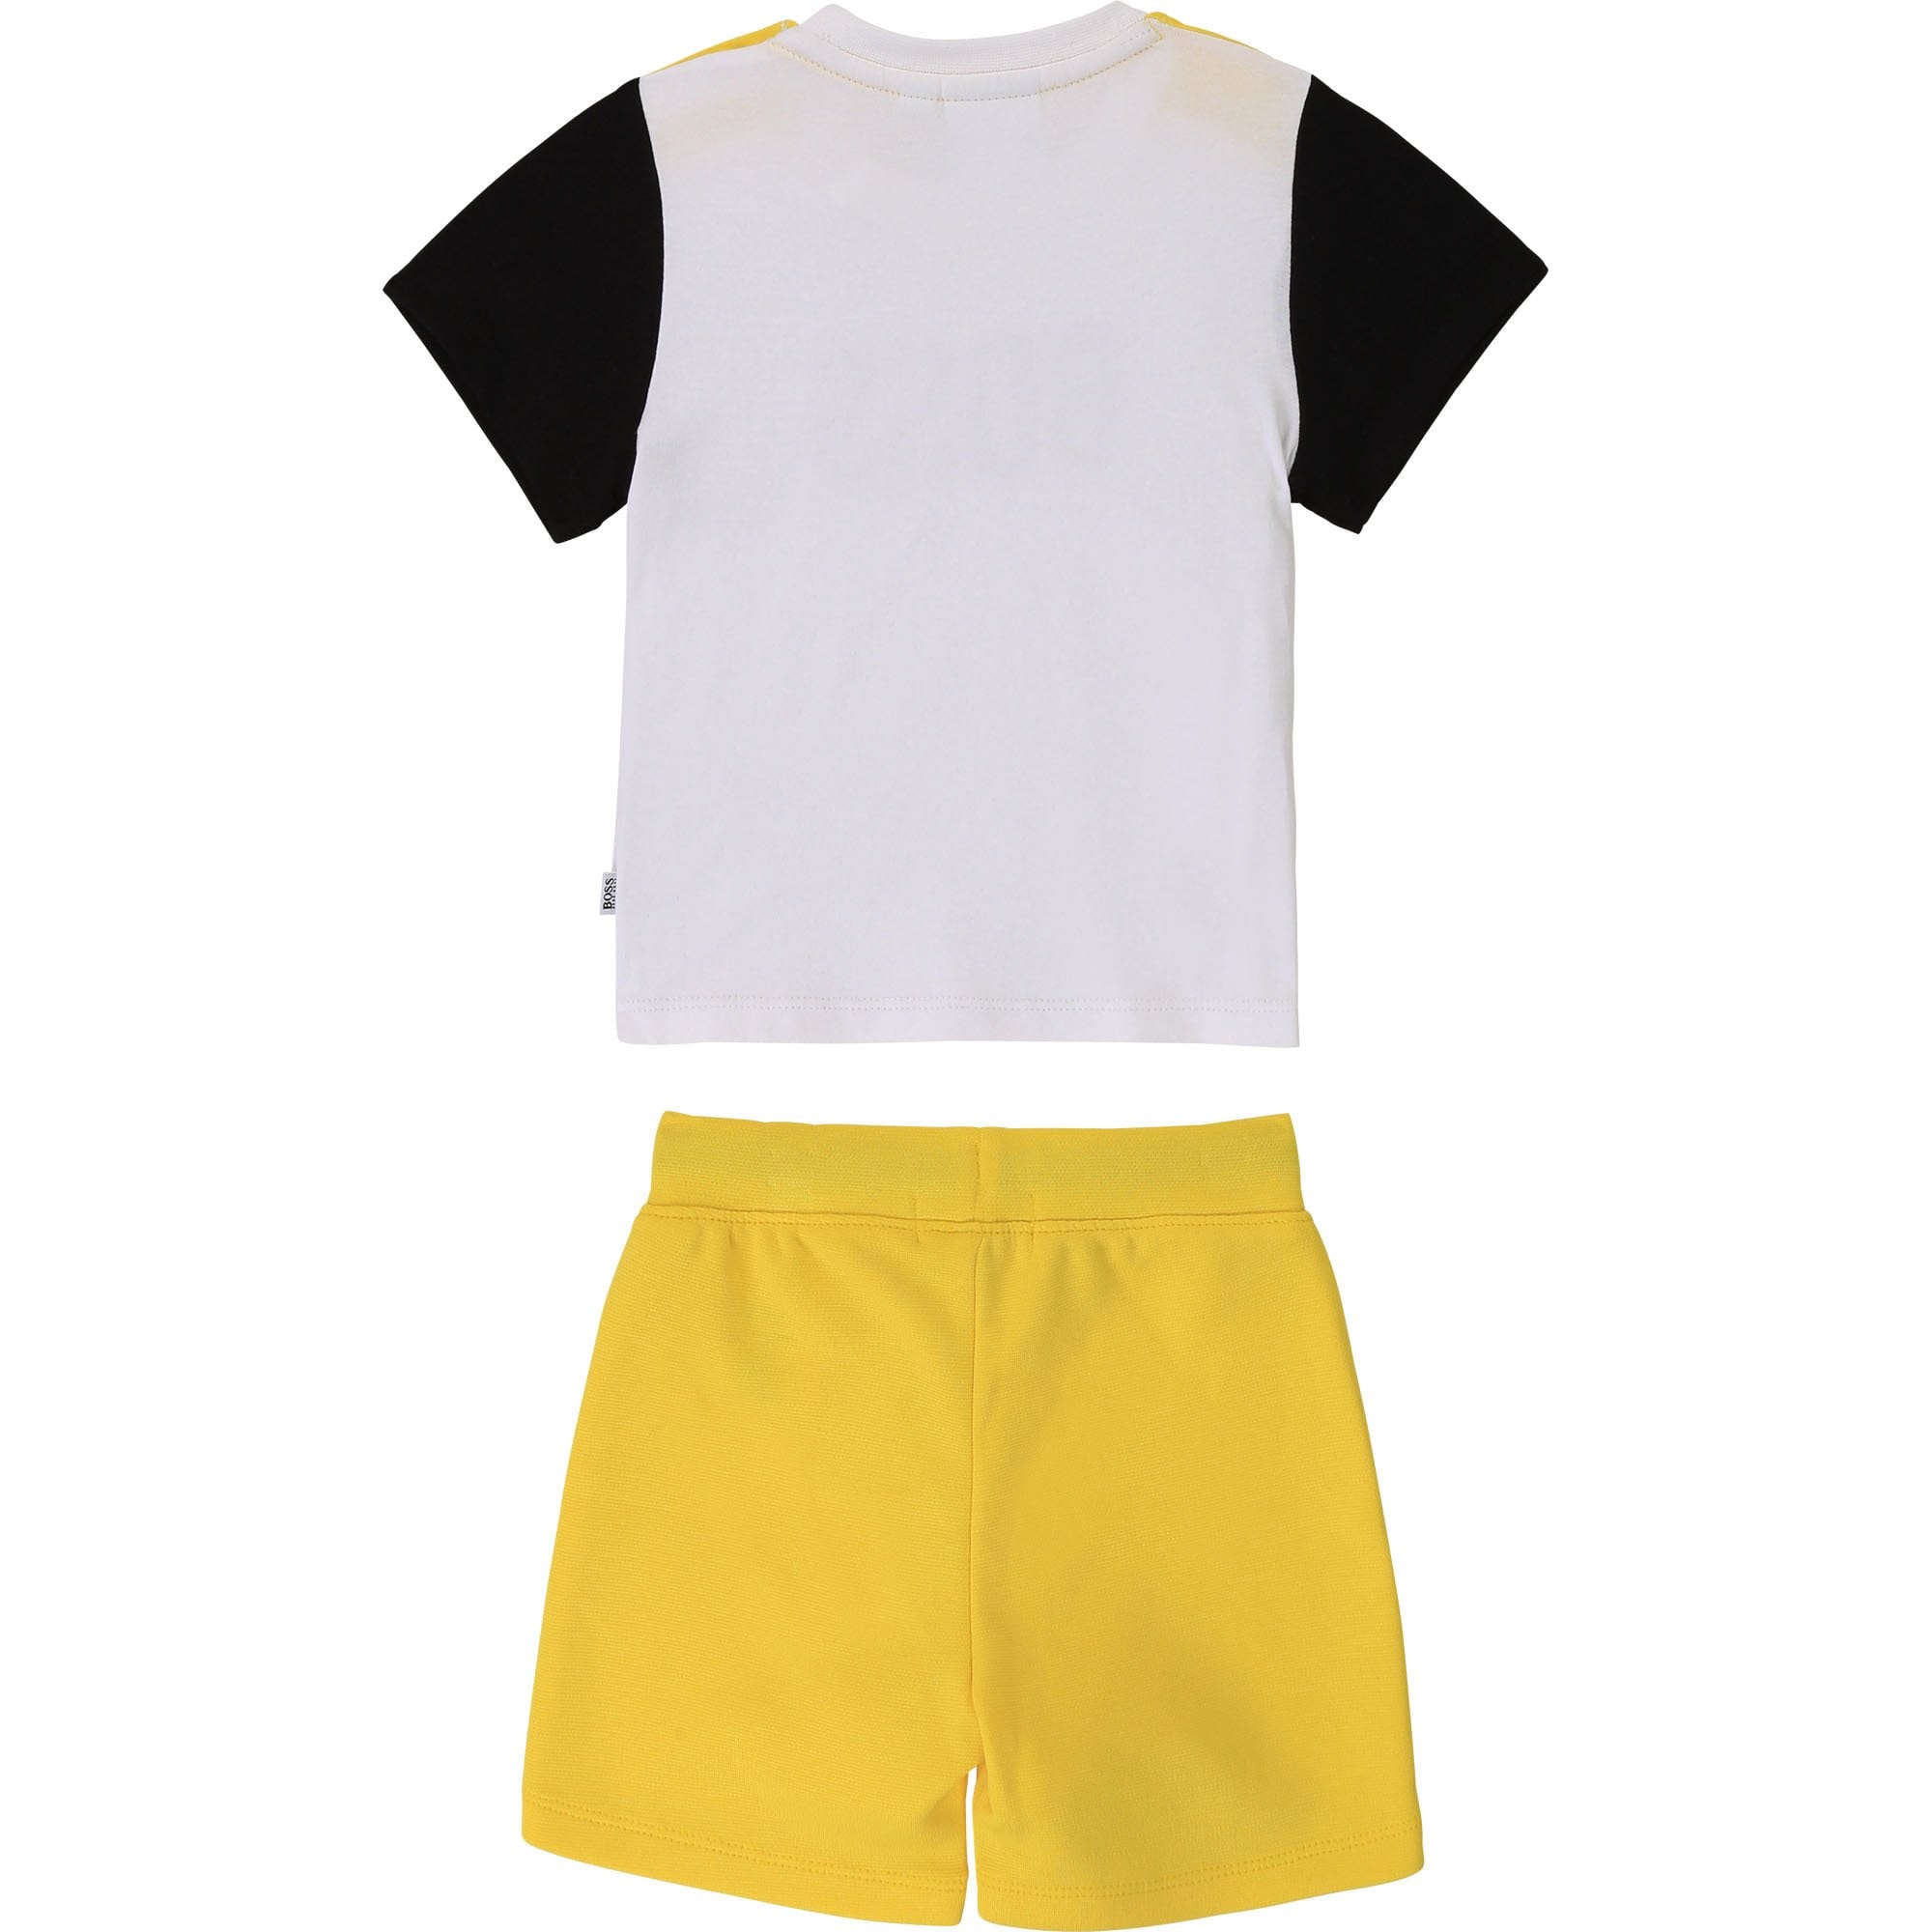 Hugo Boss Boys T-shirt And Shorts 2 Piece Set White & Yellow 18M